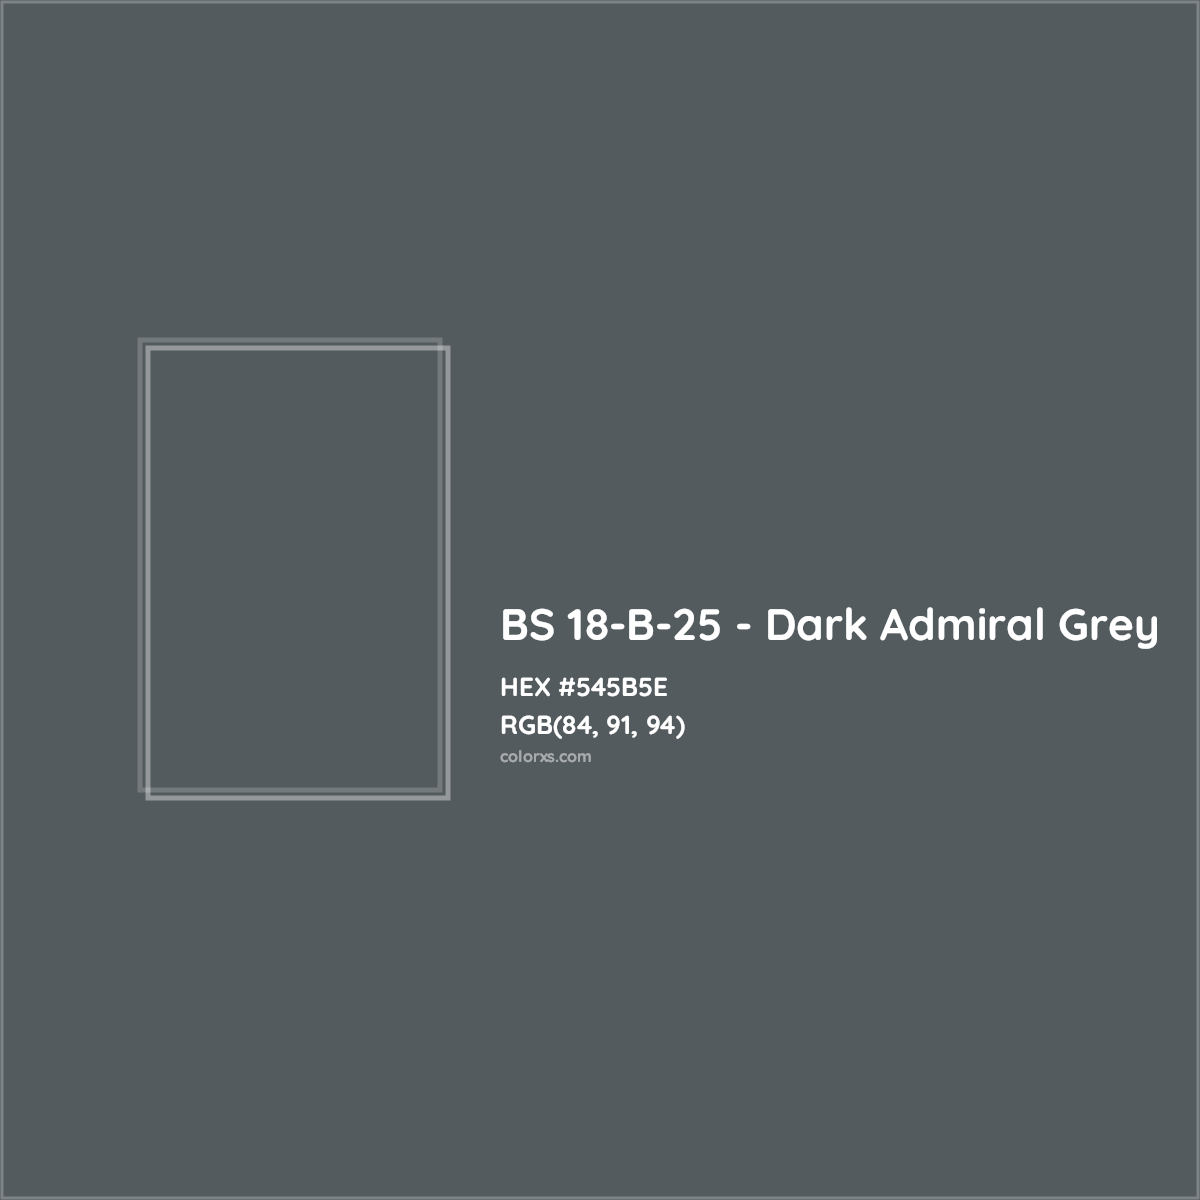 HEX #545B5E BS 18-B-25 - Dark Admiral Grey CMS British Standard 4800 - Color Code